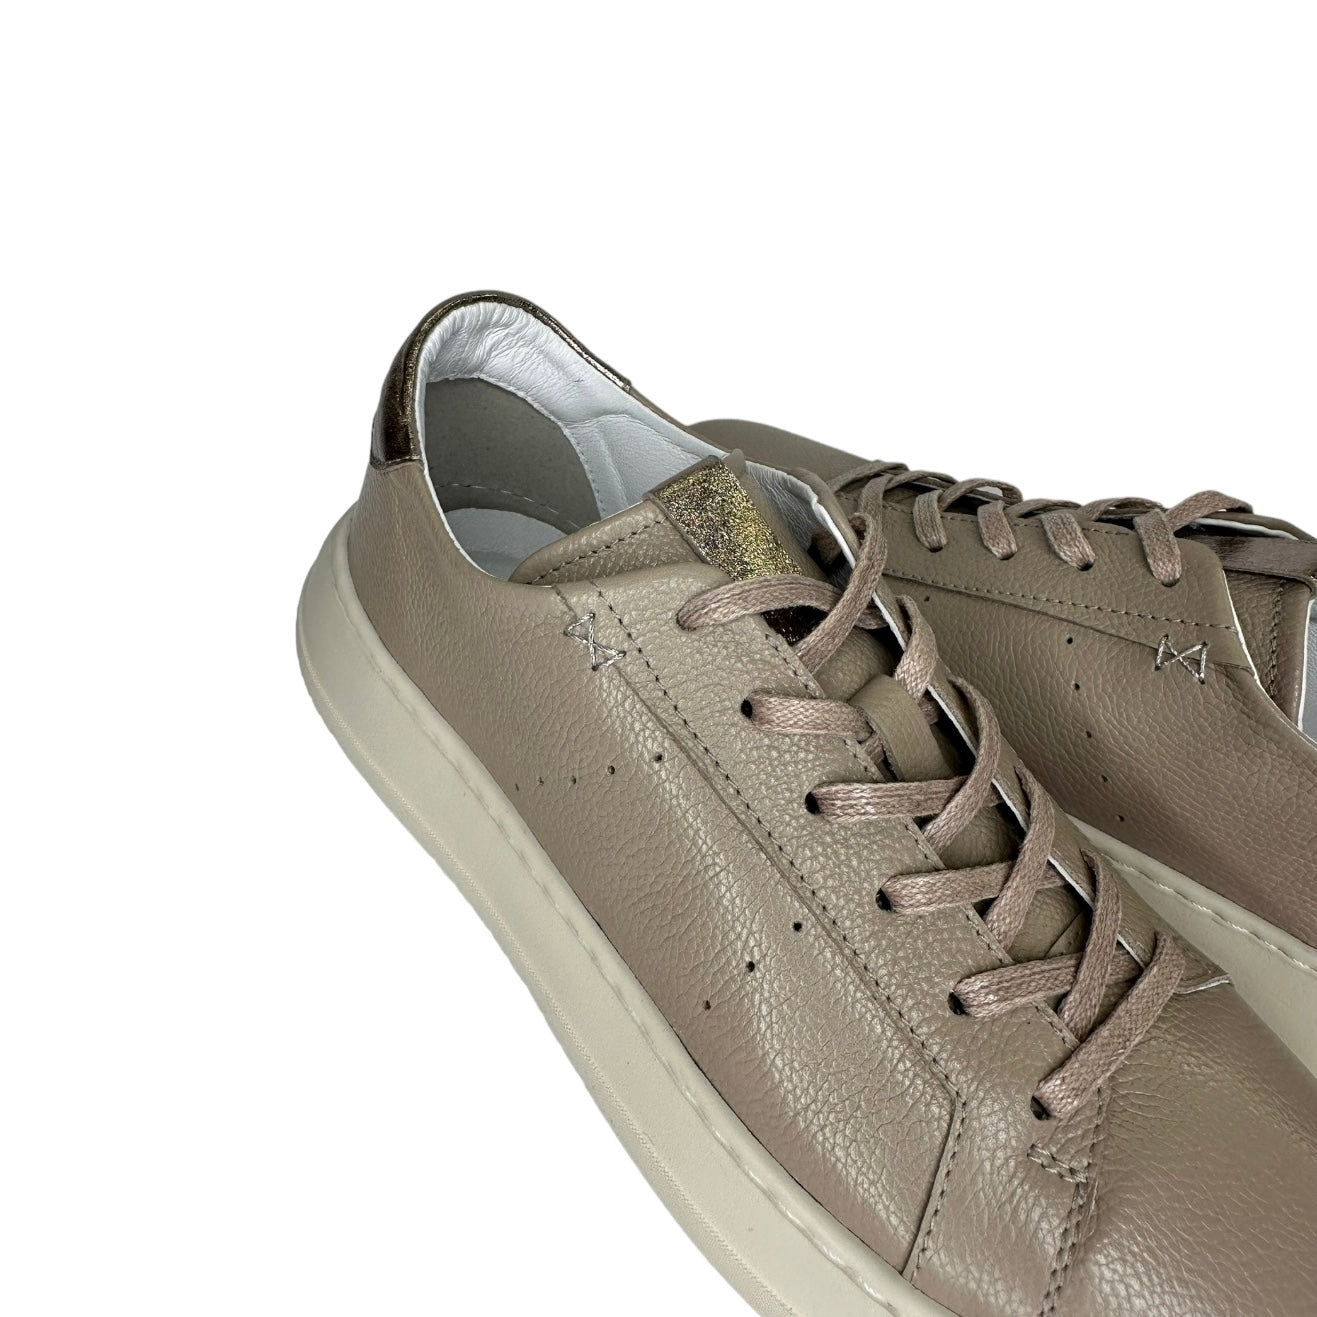 Взуття LA8 SS2405 taupe/glitter grey